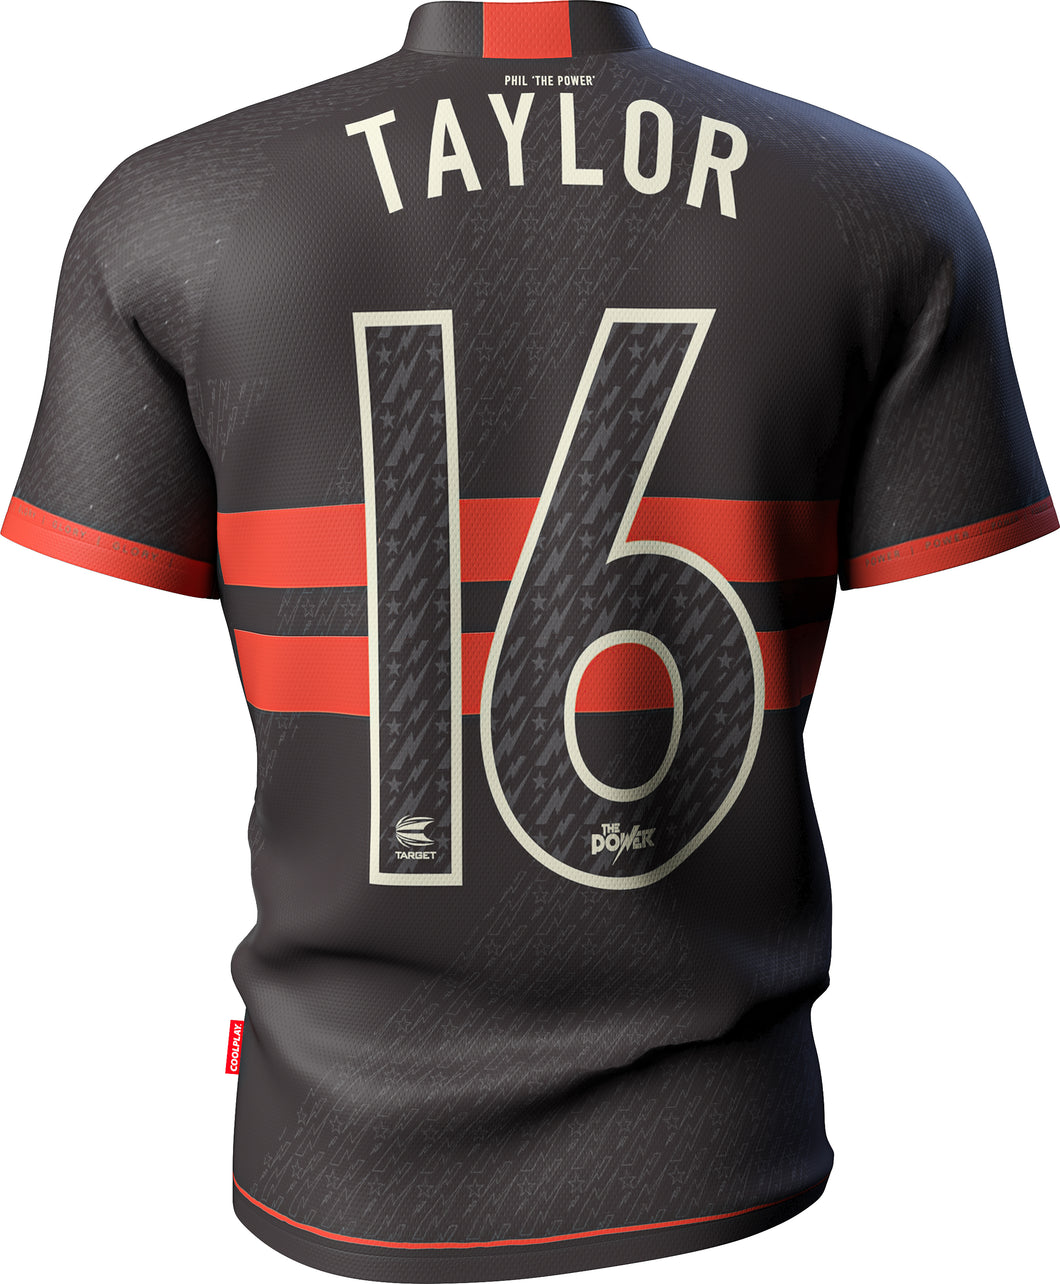 Target Cool Play - Collarless - Phil Taylor - Dart Shirt - XSmall to 5XL